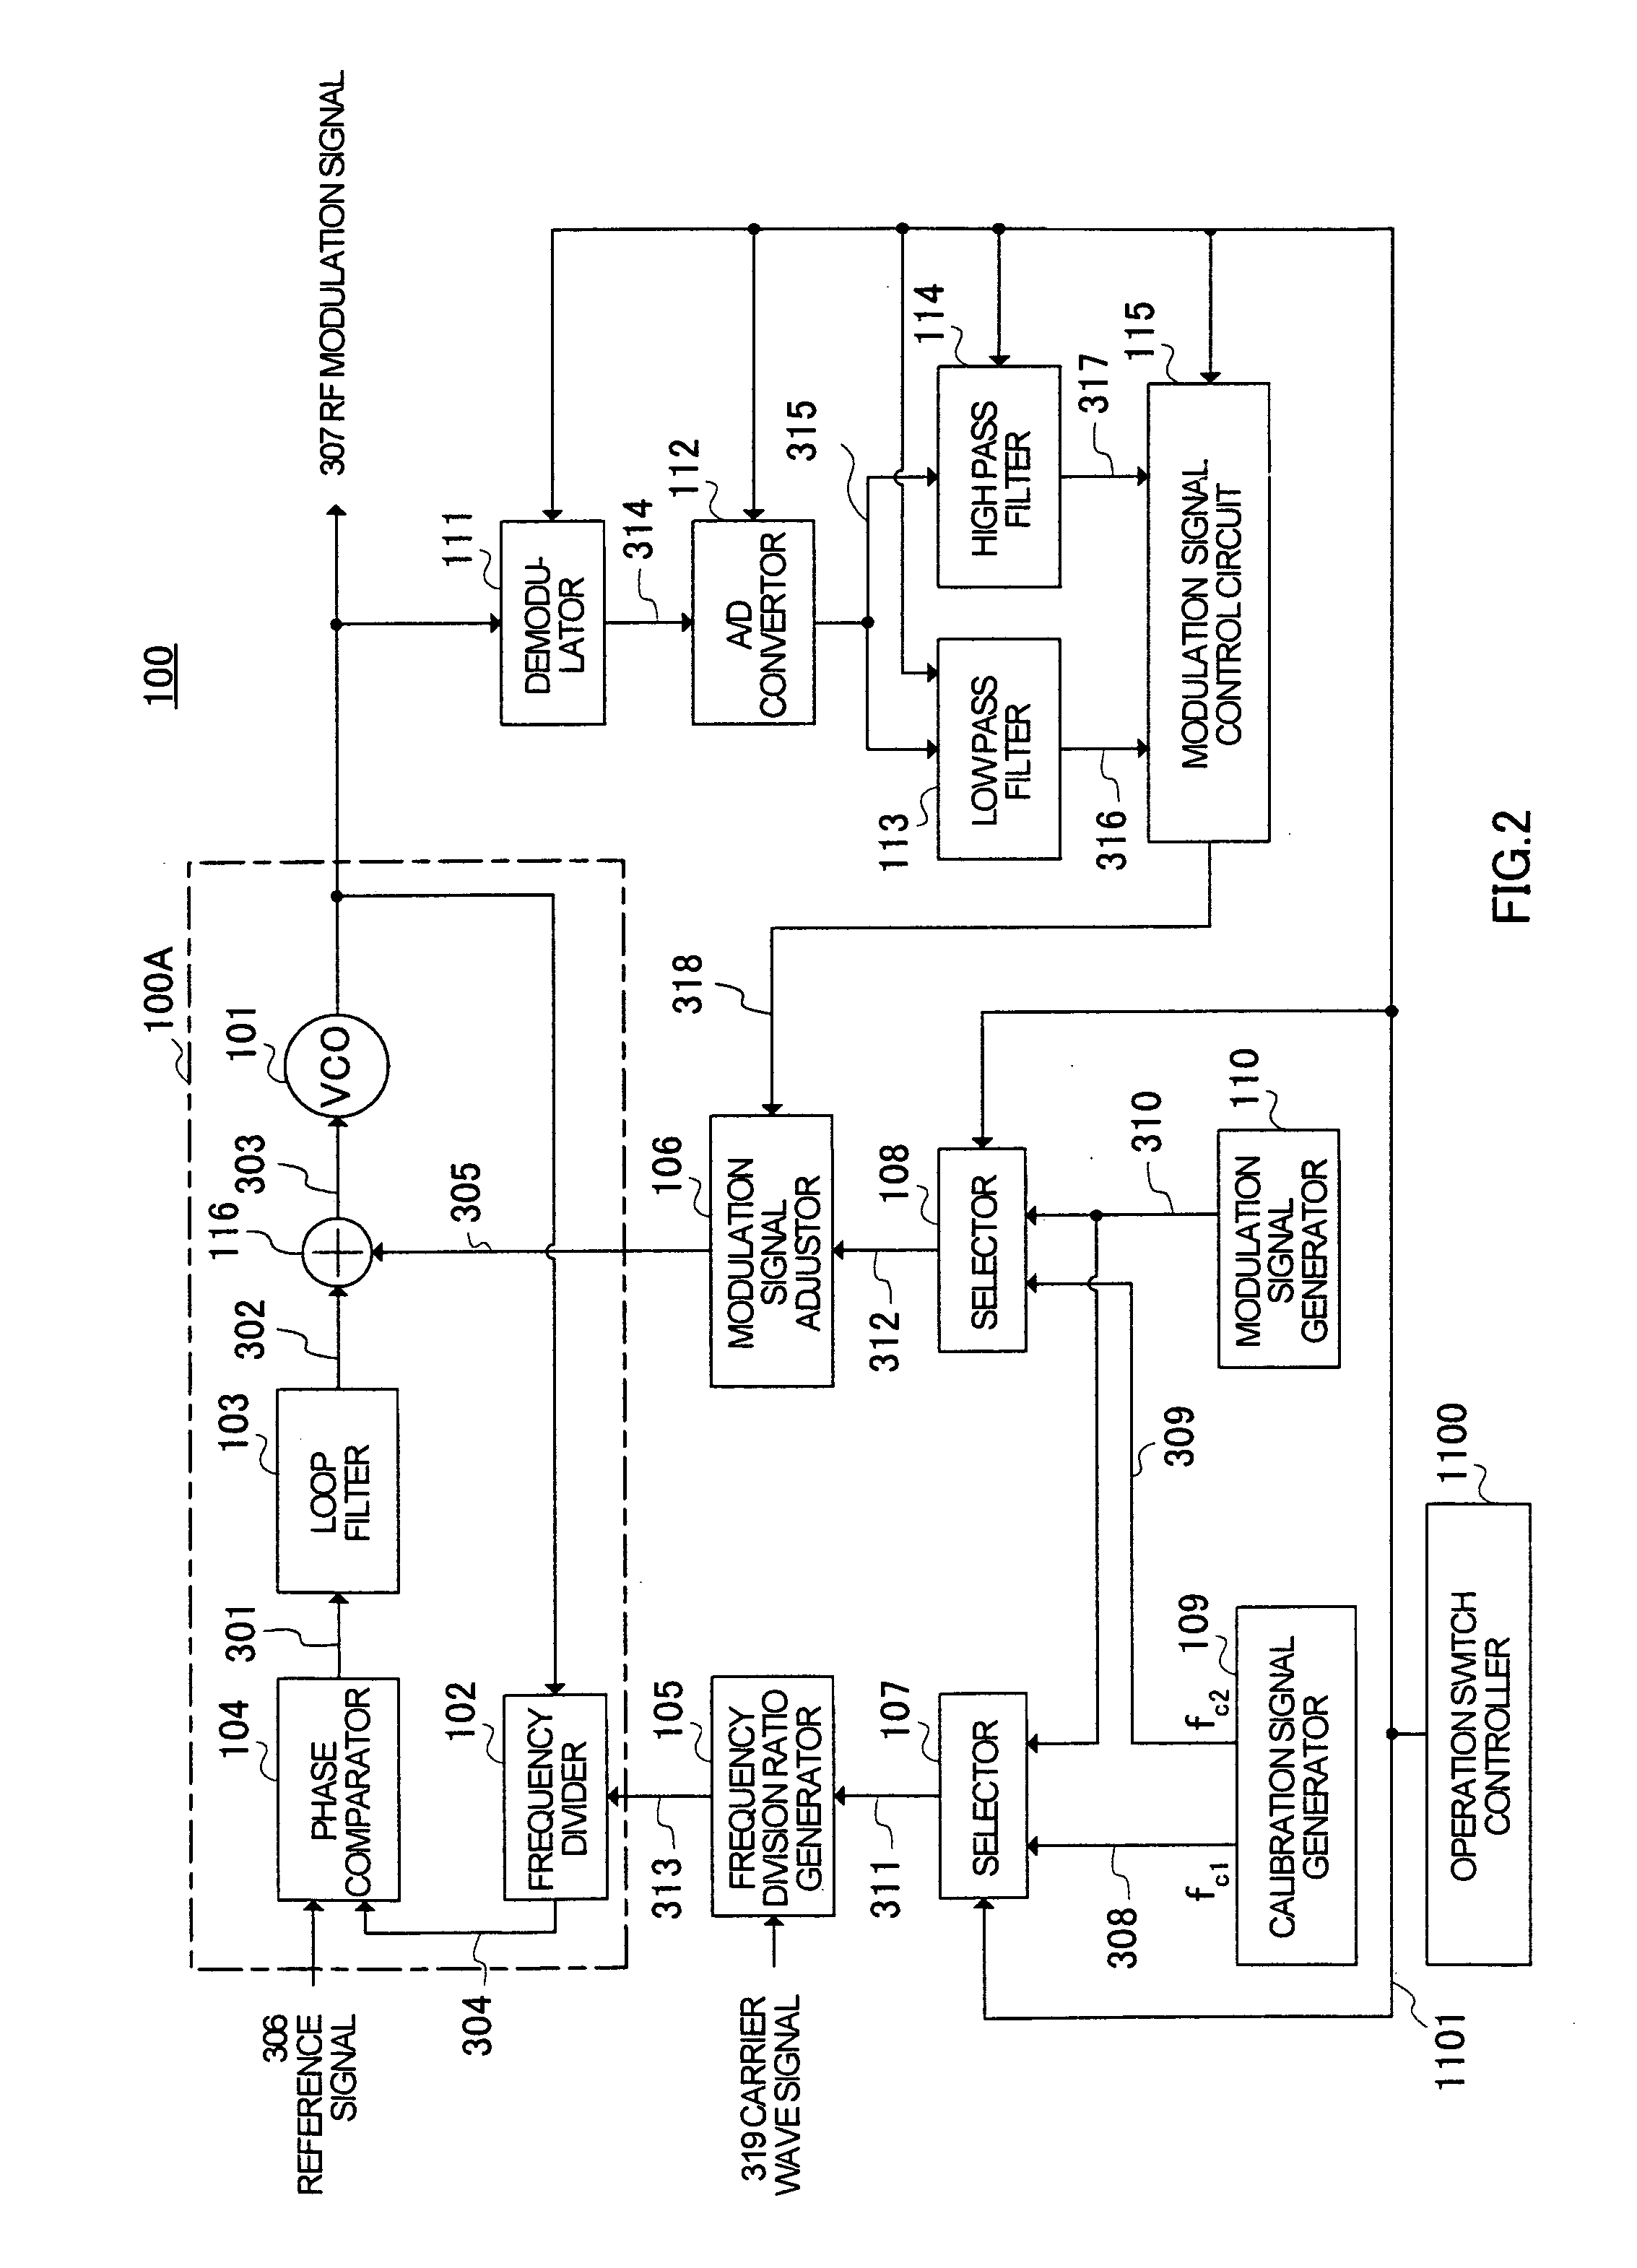 PLL modulation circuit and polar modulation apparatus